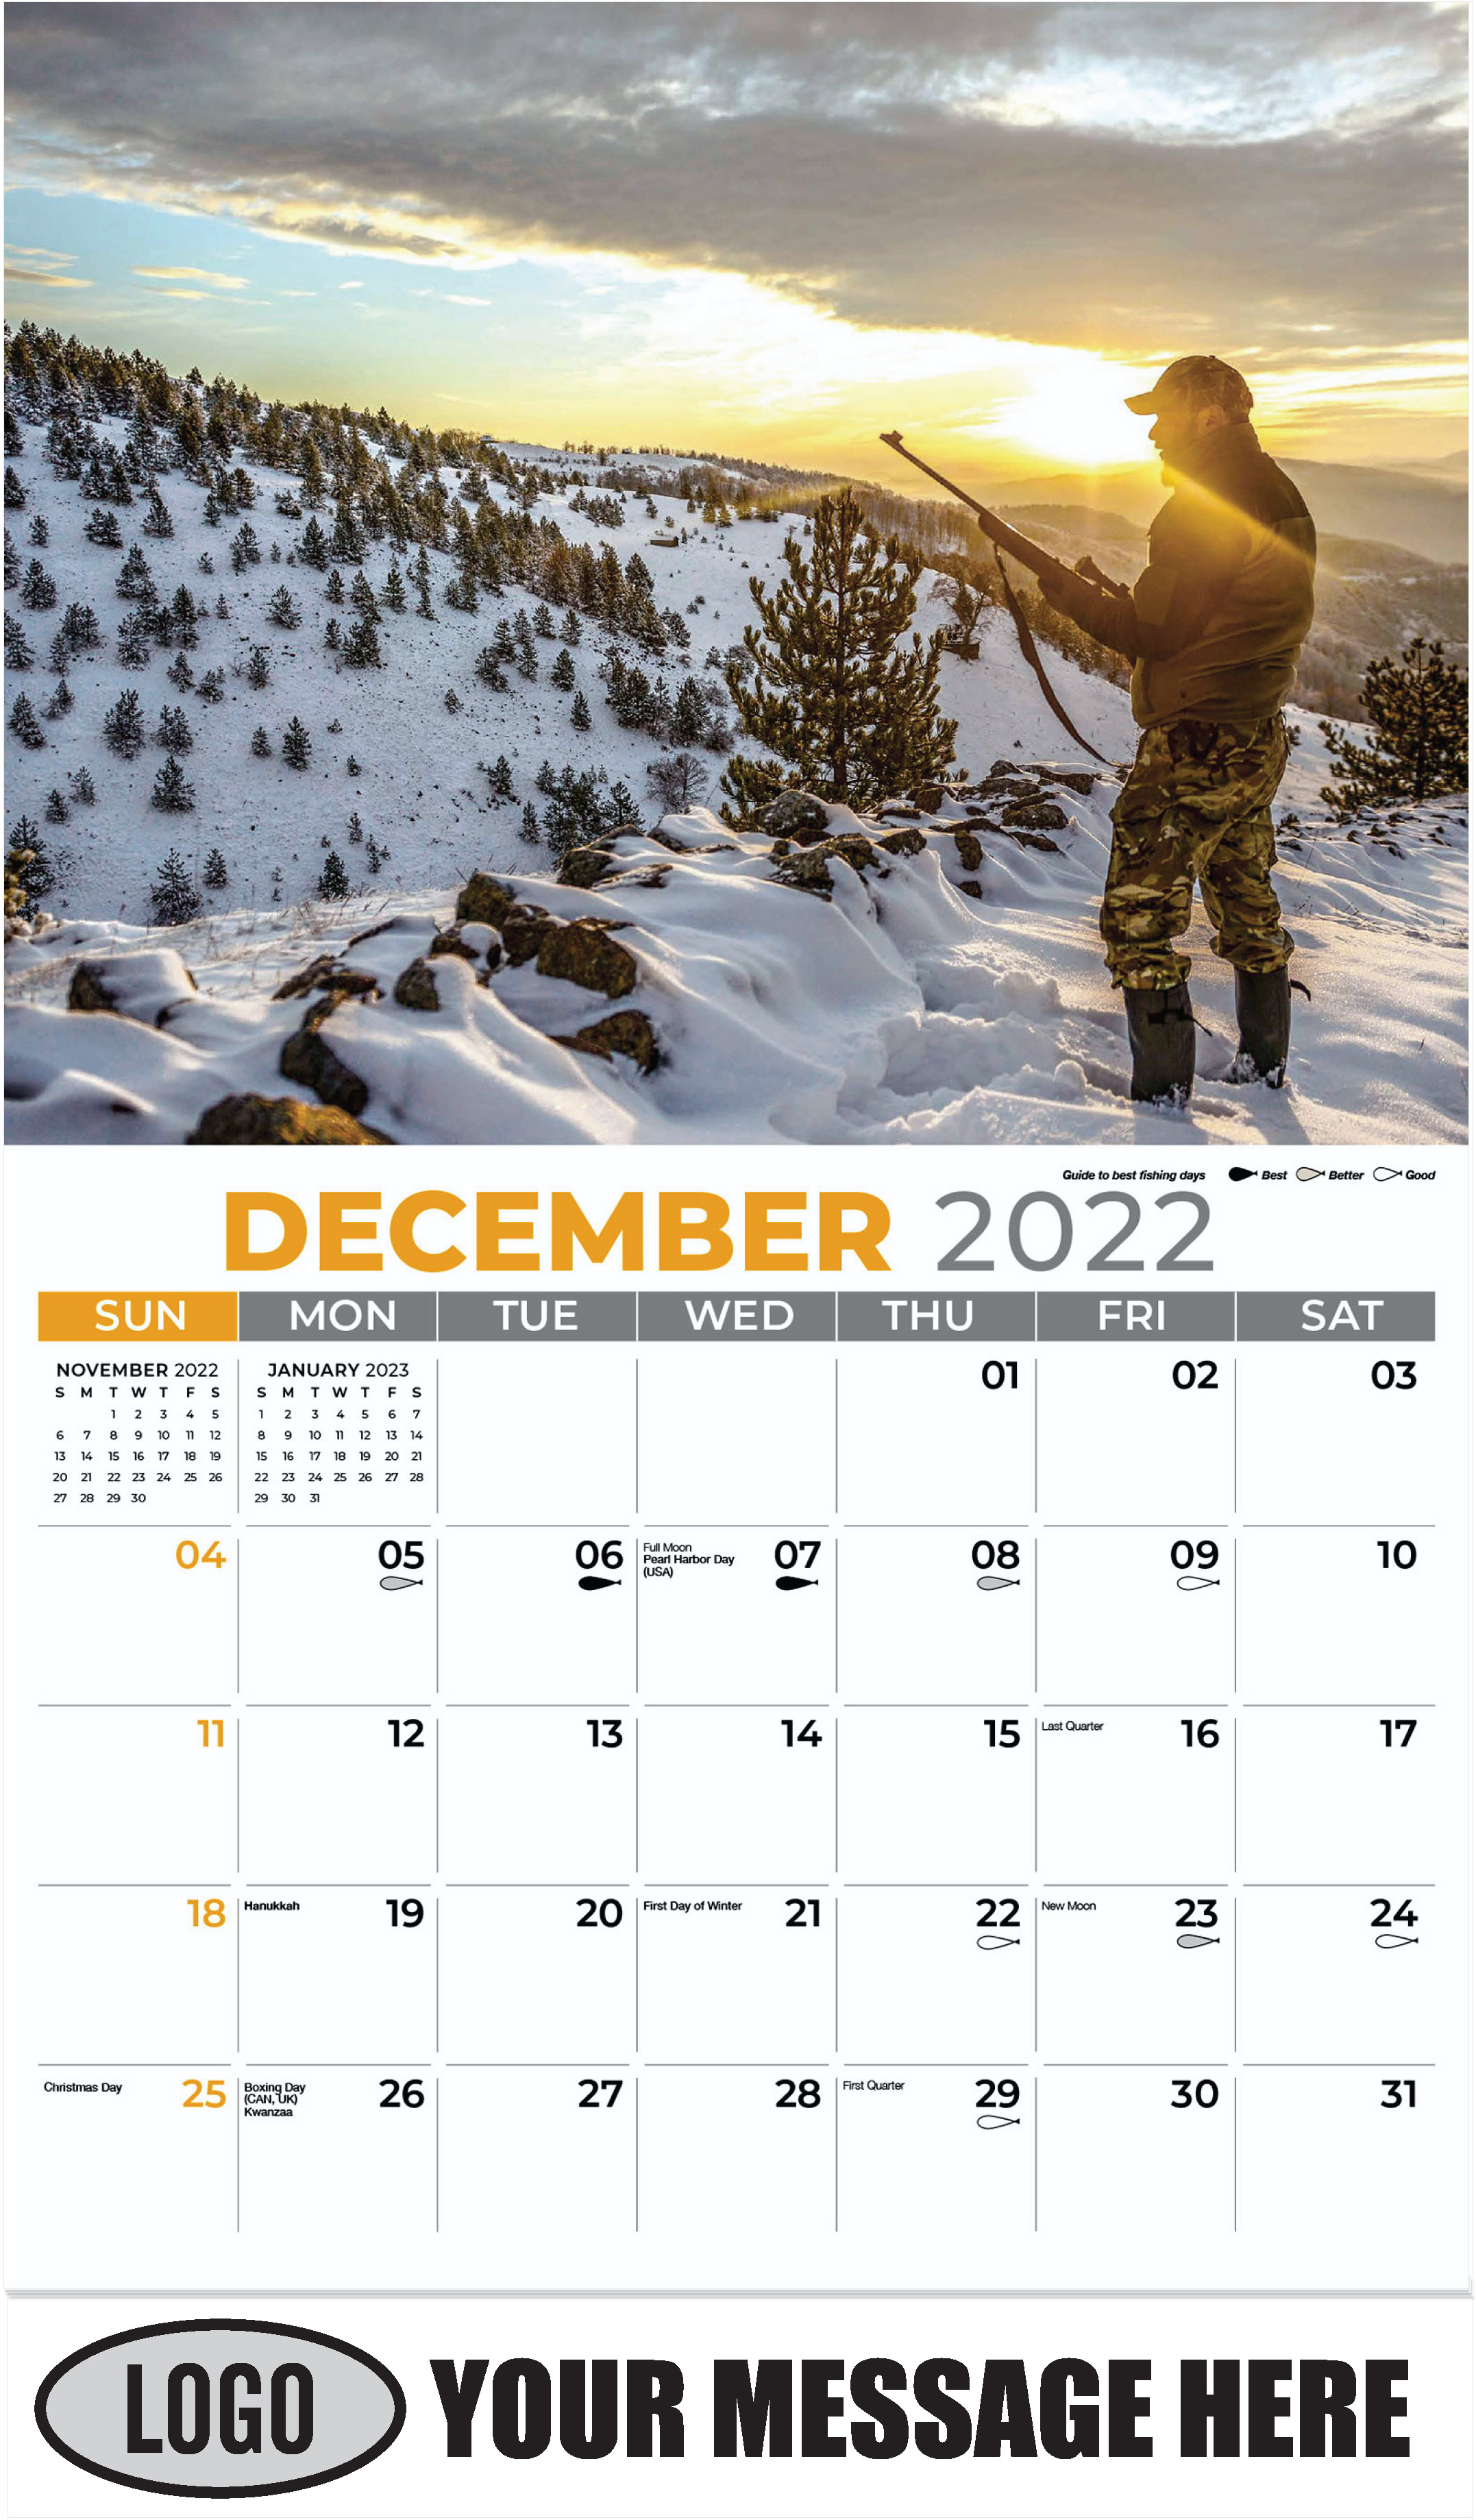 December 2022 - Fishing & Hunting 2023 Promotional Calendar